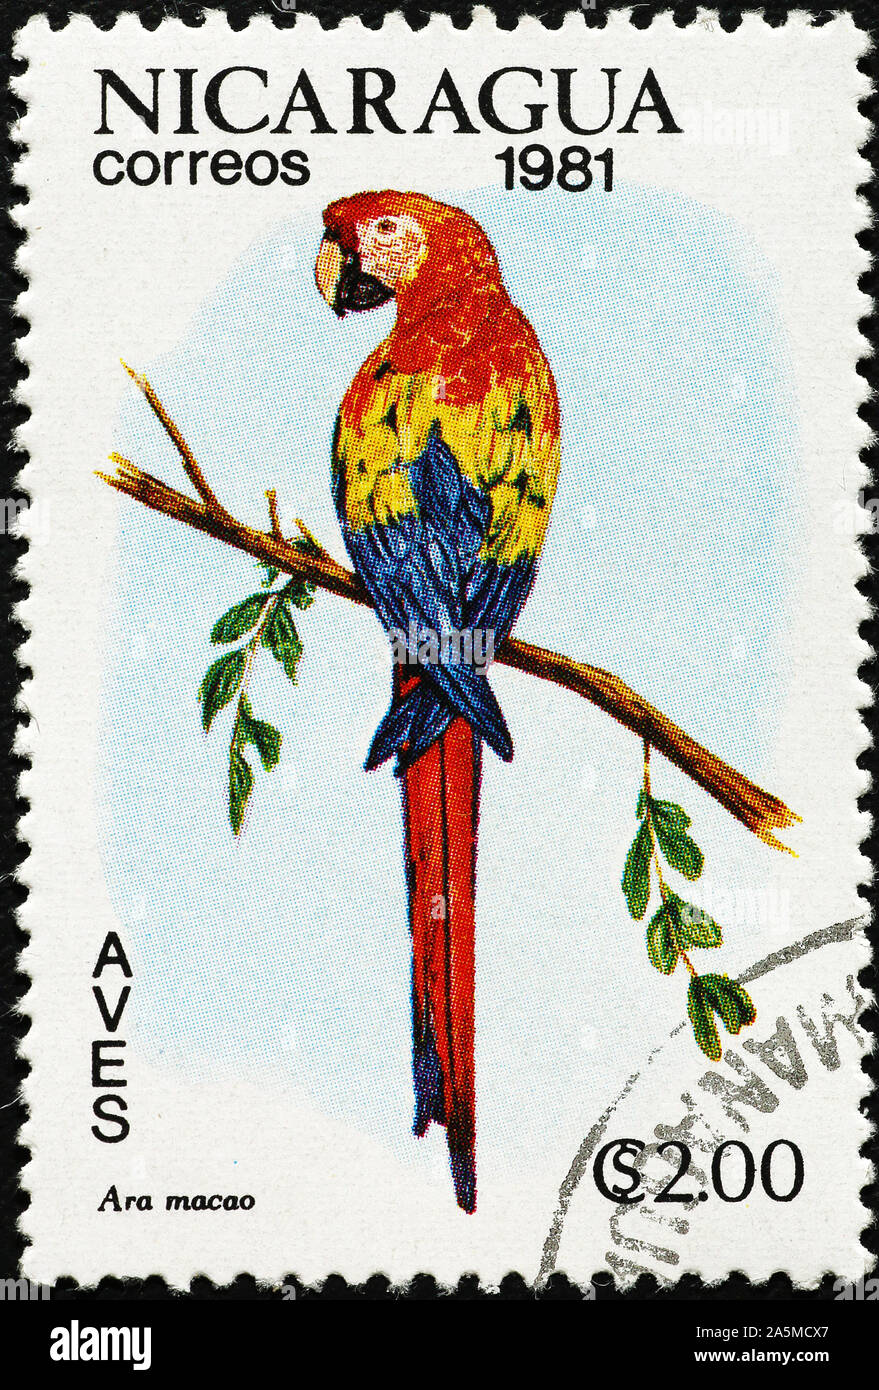 Estampilla postal nicaragua fotografías e imágenes de alta resolución -  Alamy